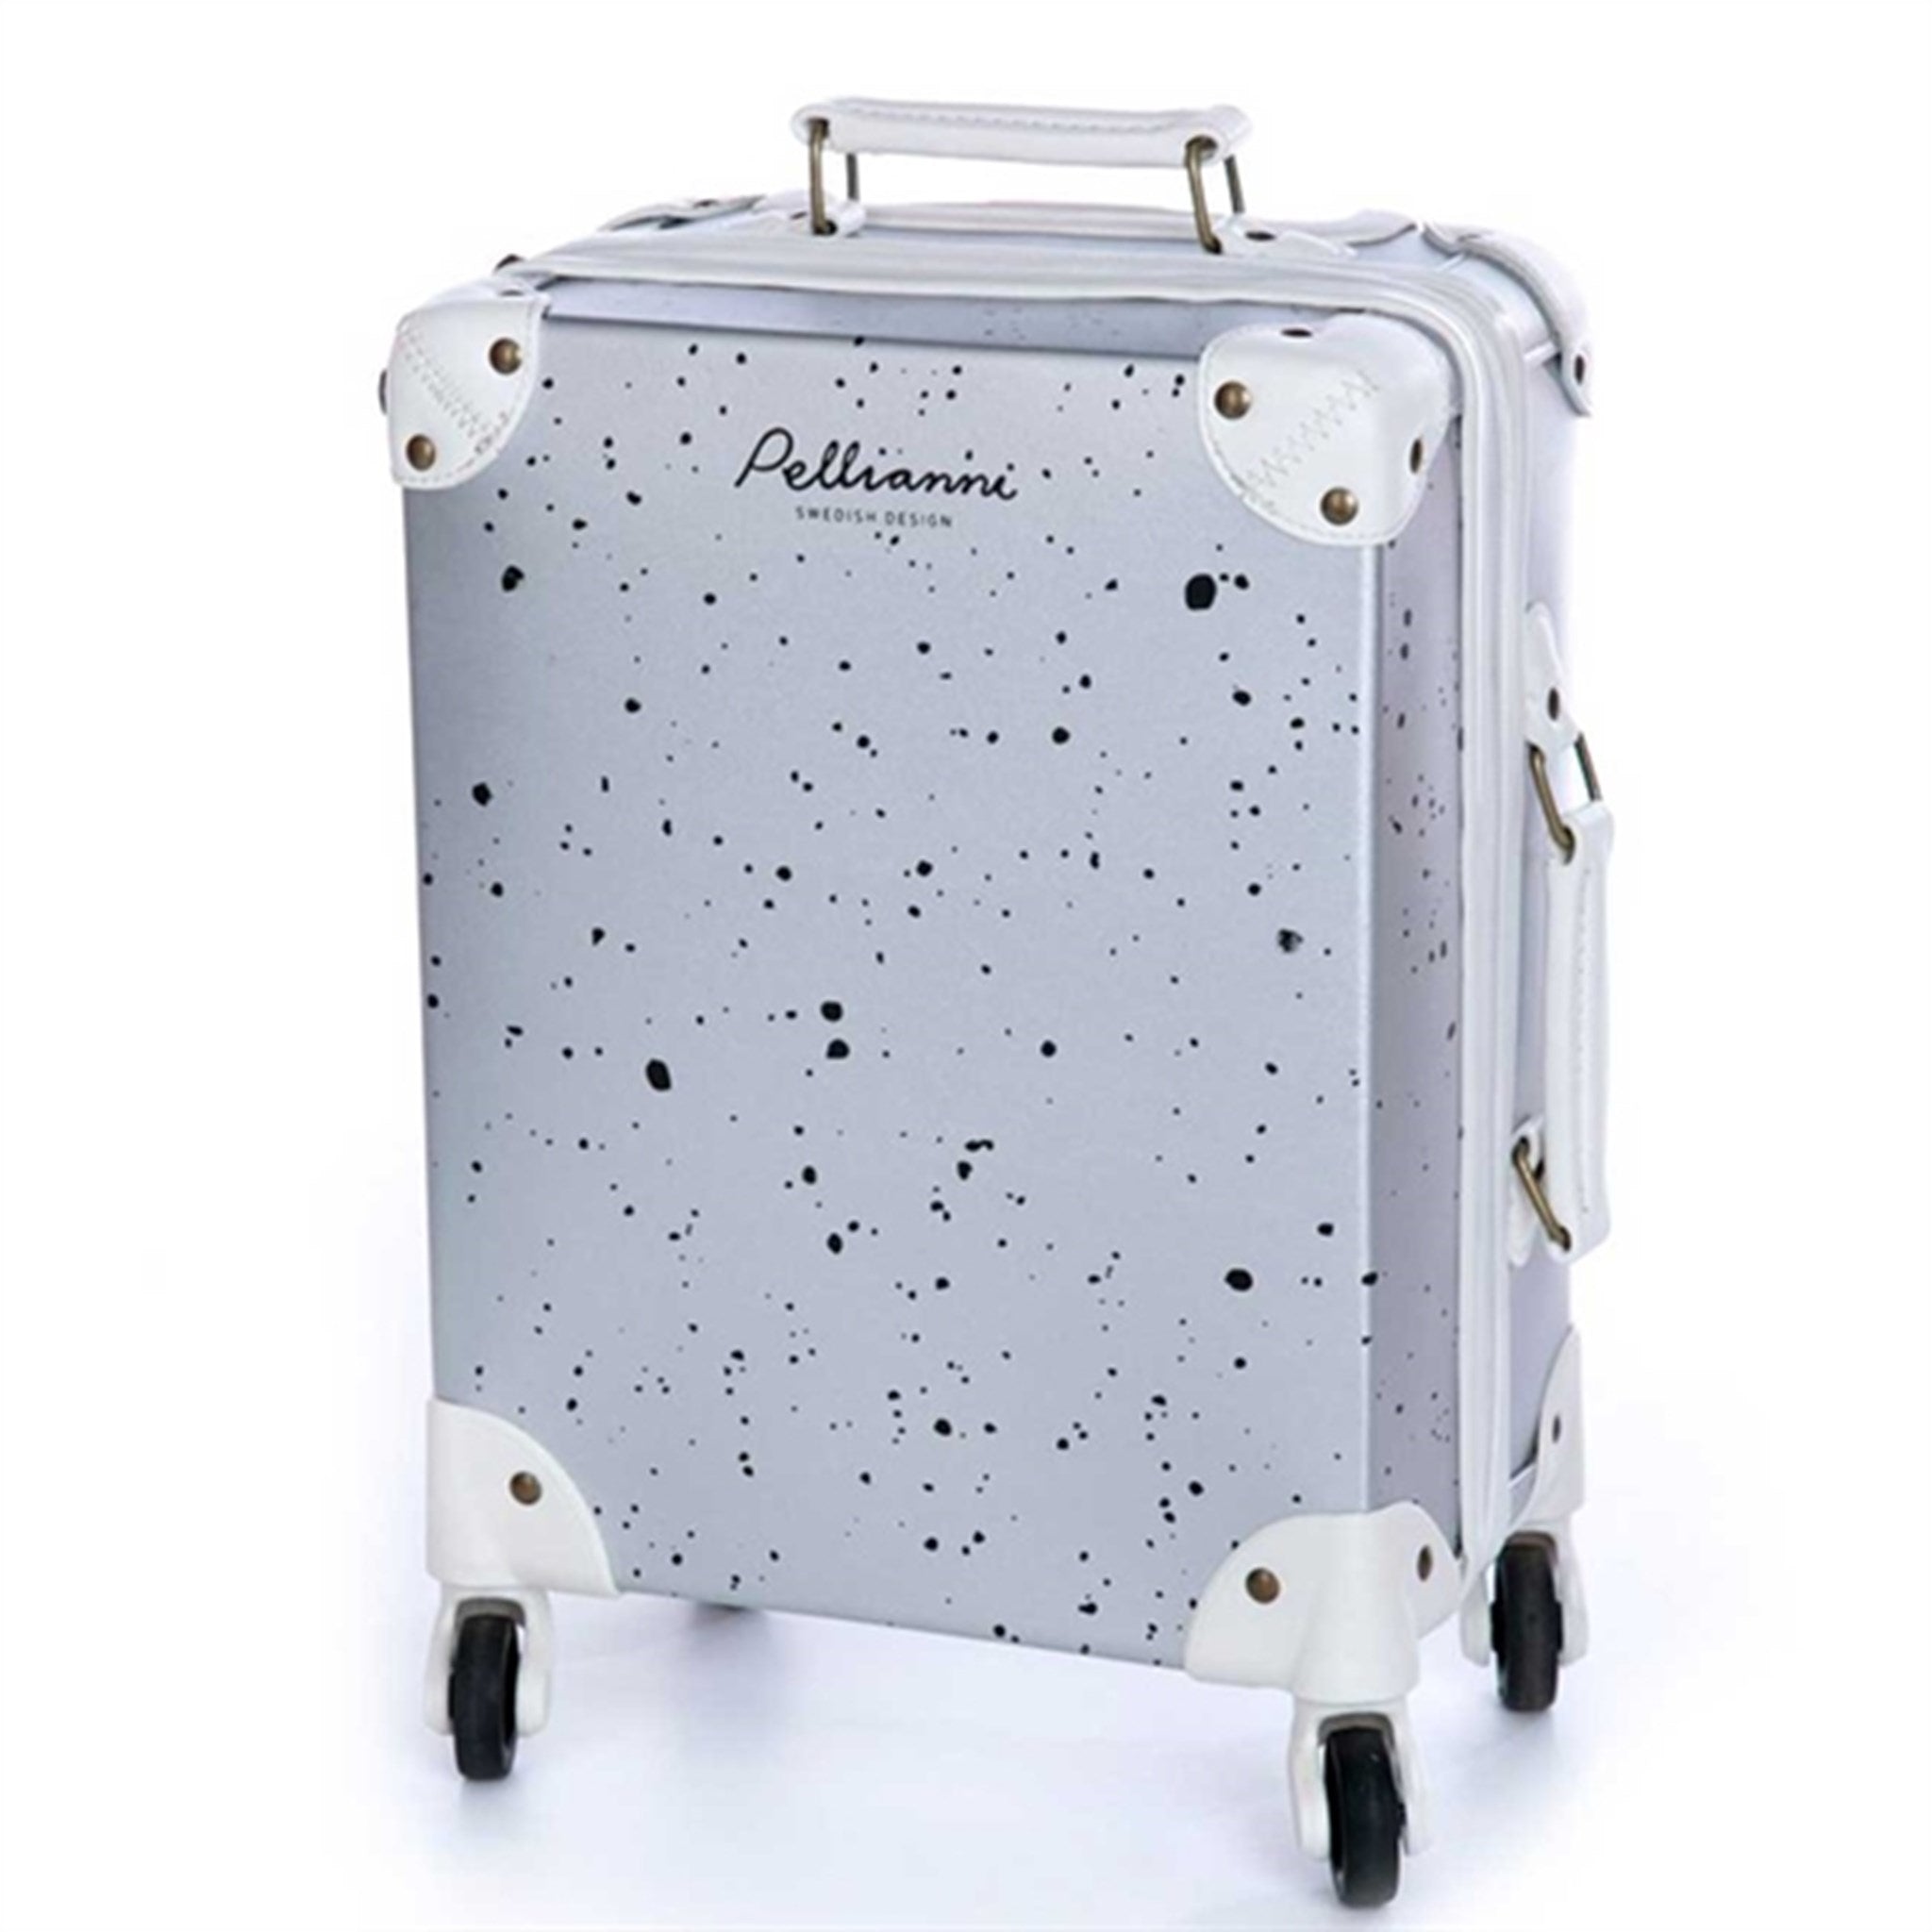 Pellianni City Suitcase Silver